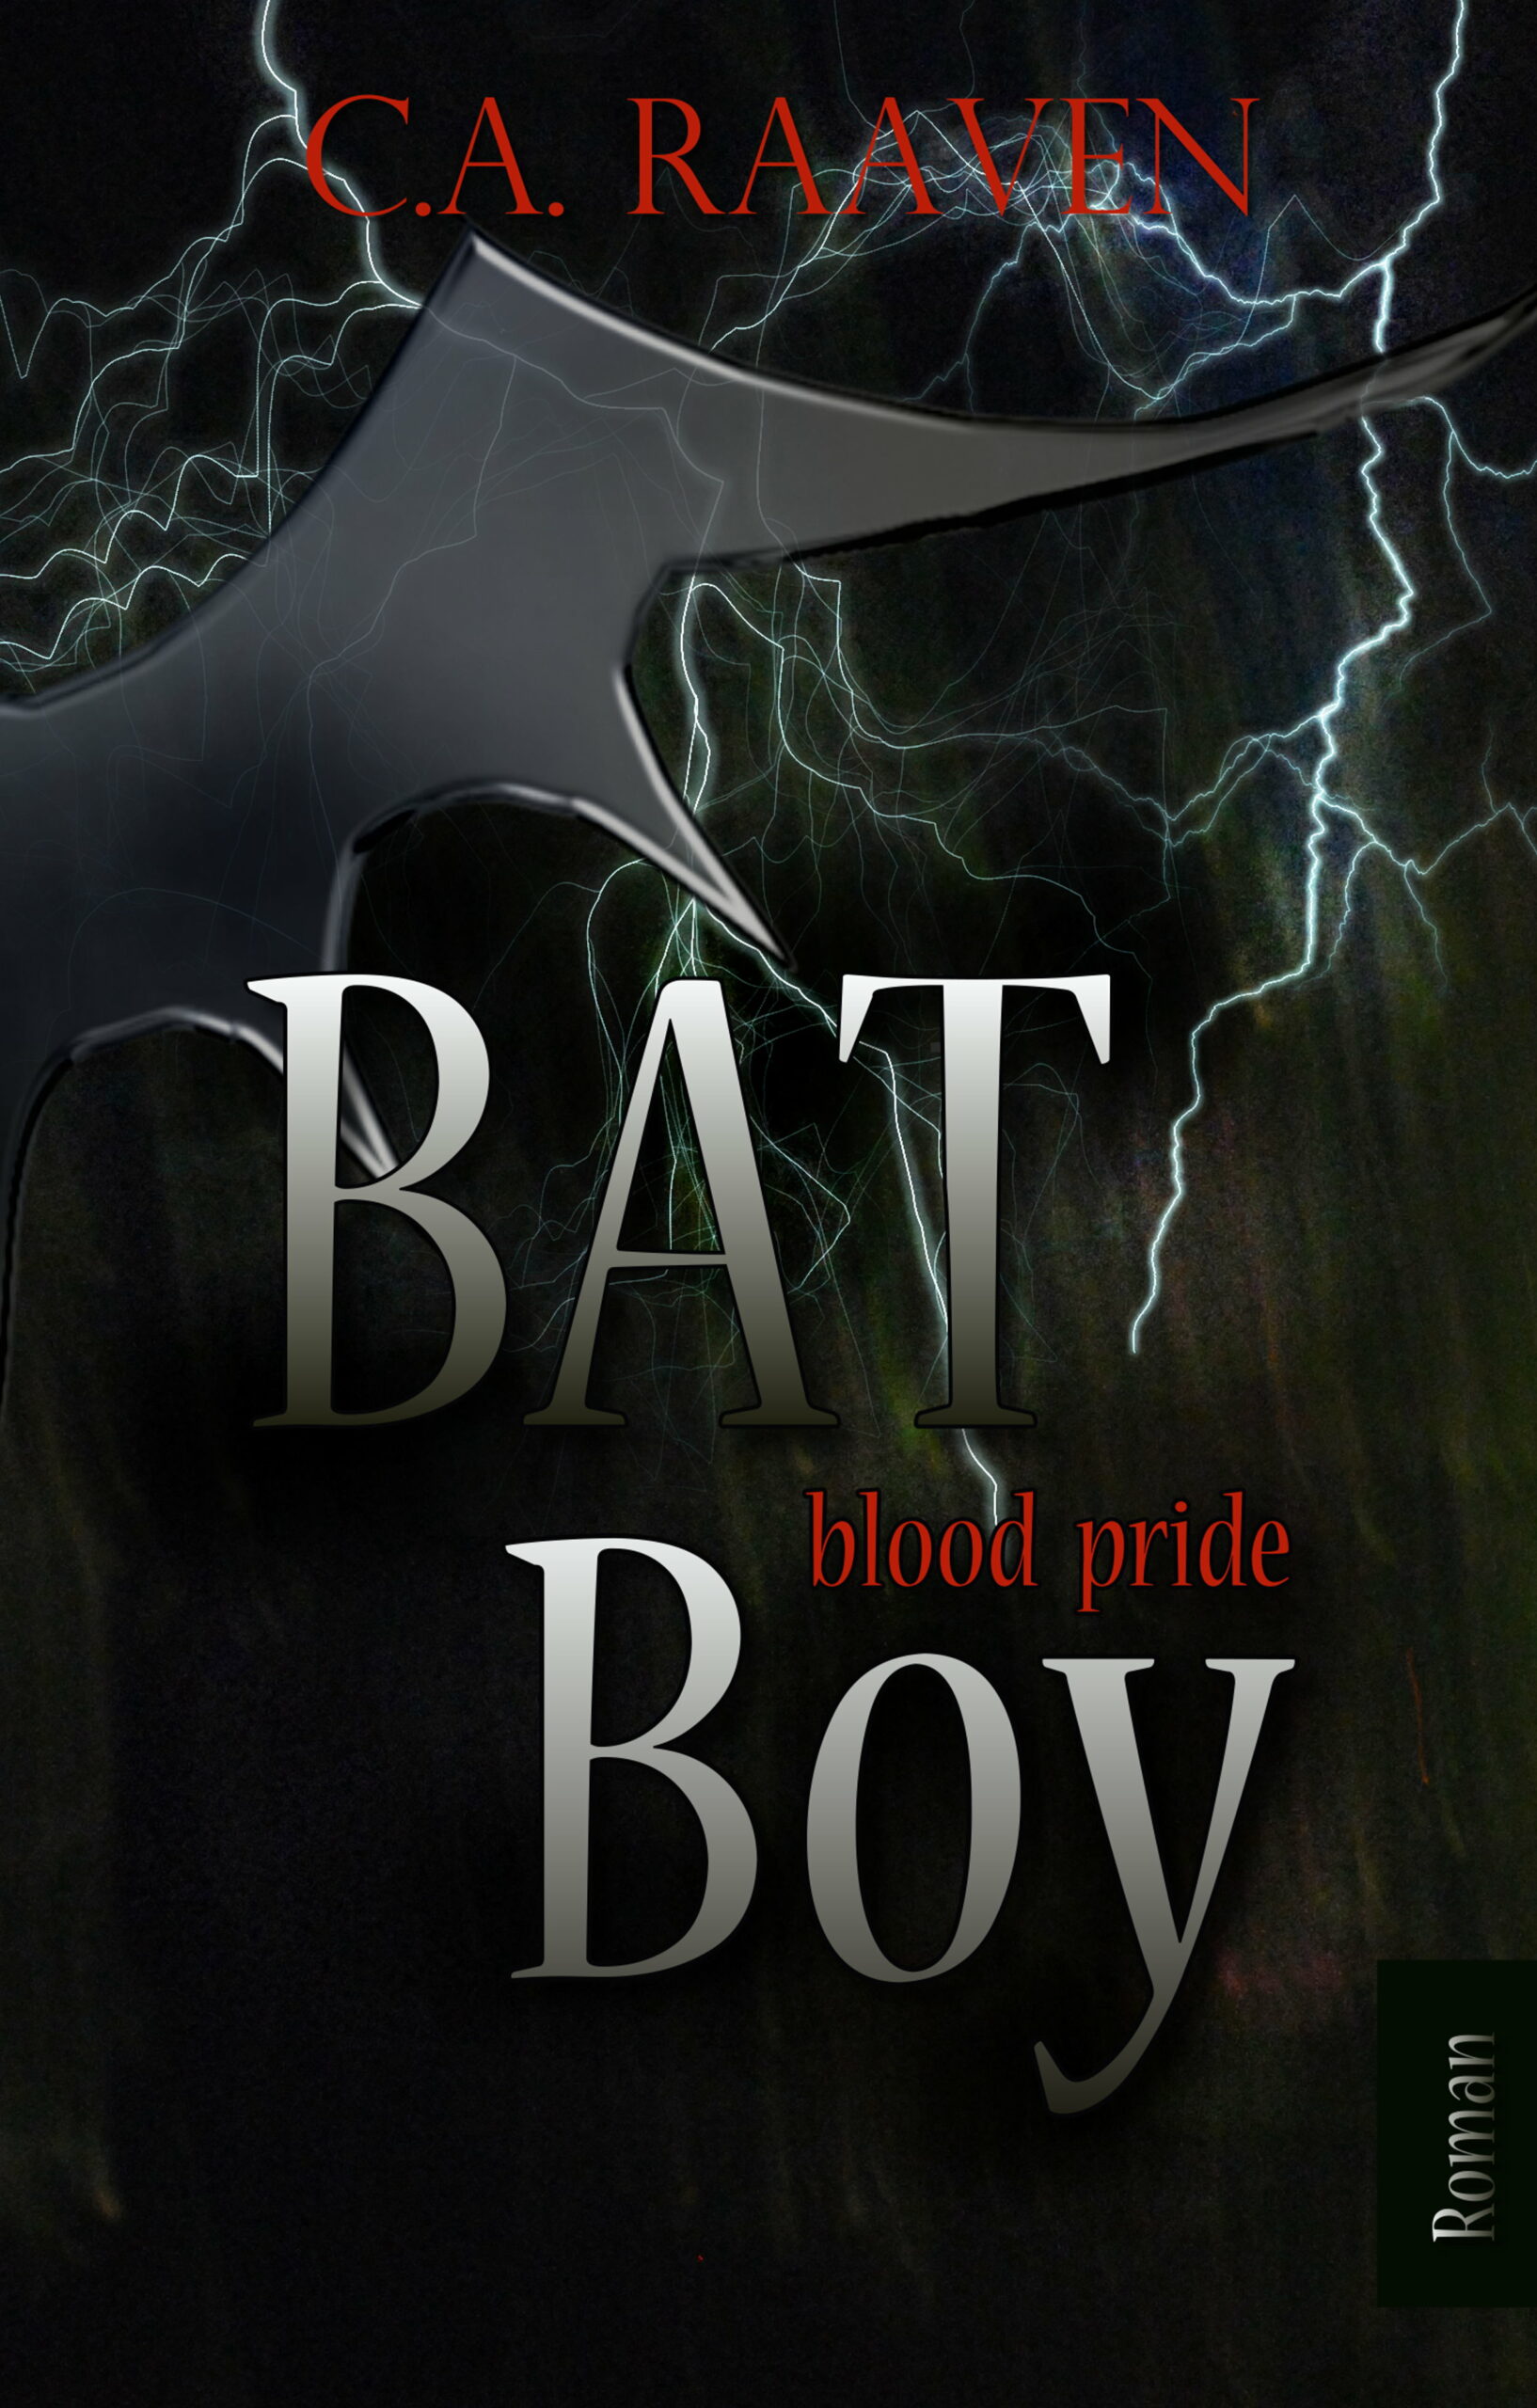 BAT Boy 2